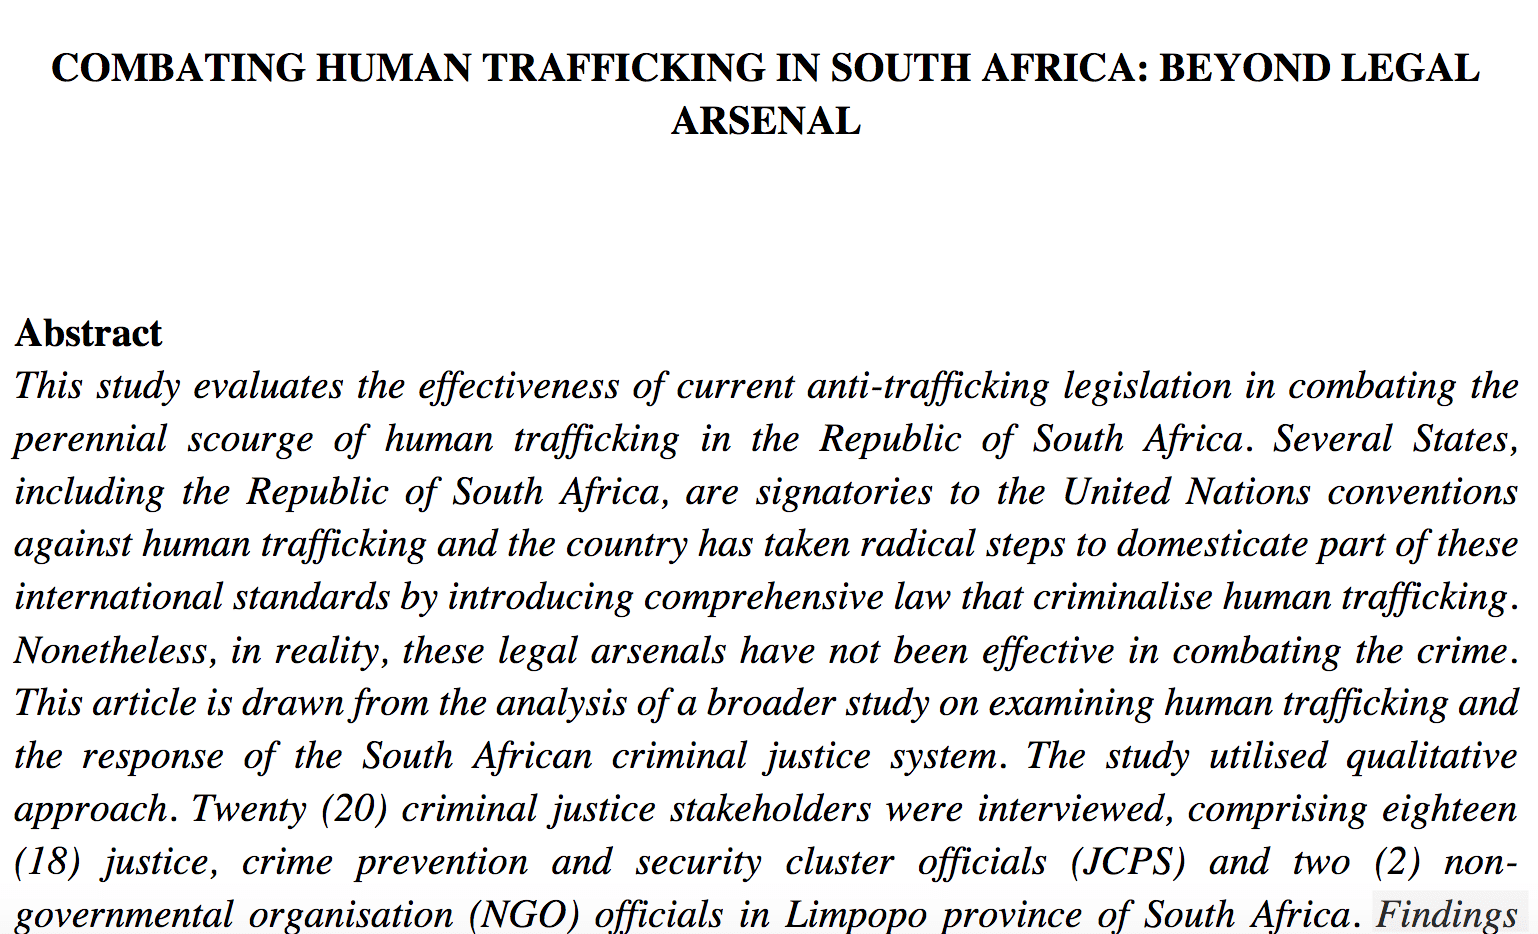 Combating human trafficking in South Africa: Beyond legal arsenal